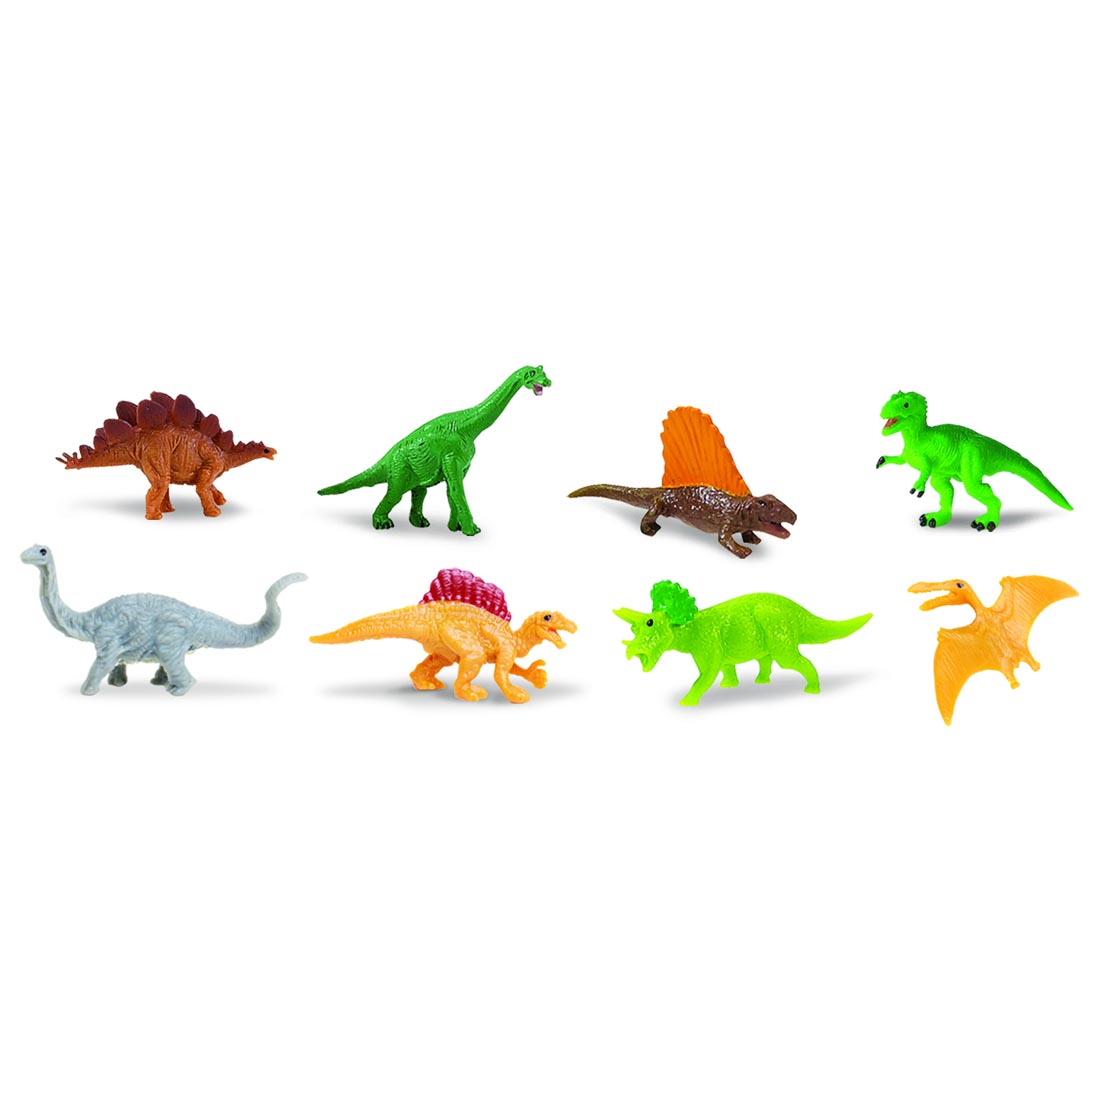 Eight different dinosaur mini figurines